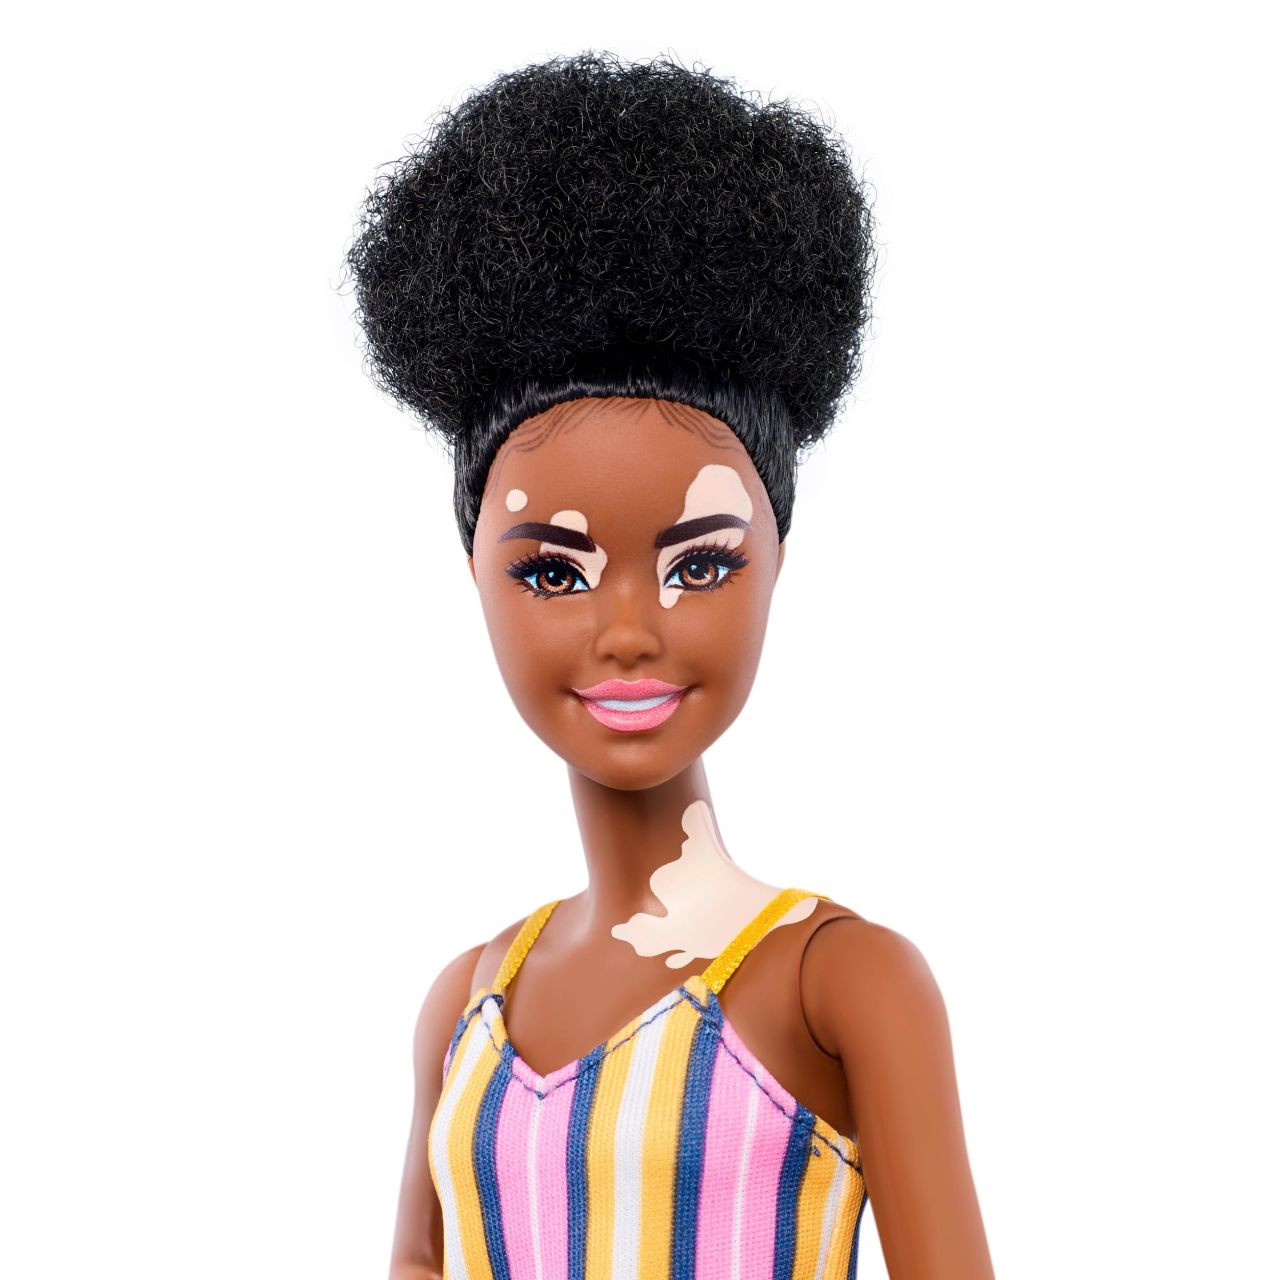 New Barbie dolls feature vitiligo and hairless models | CNN